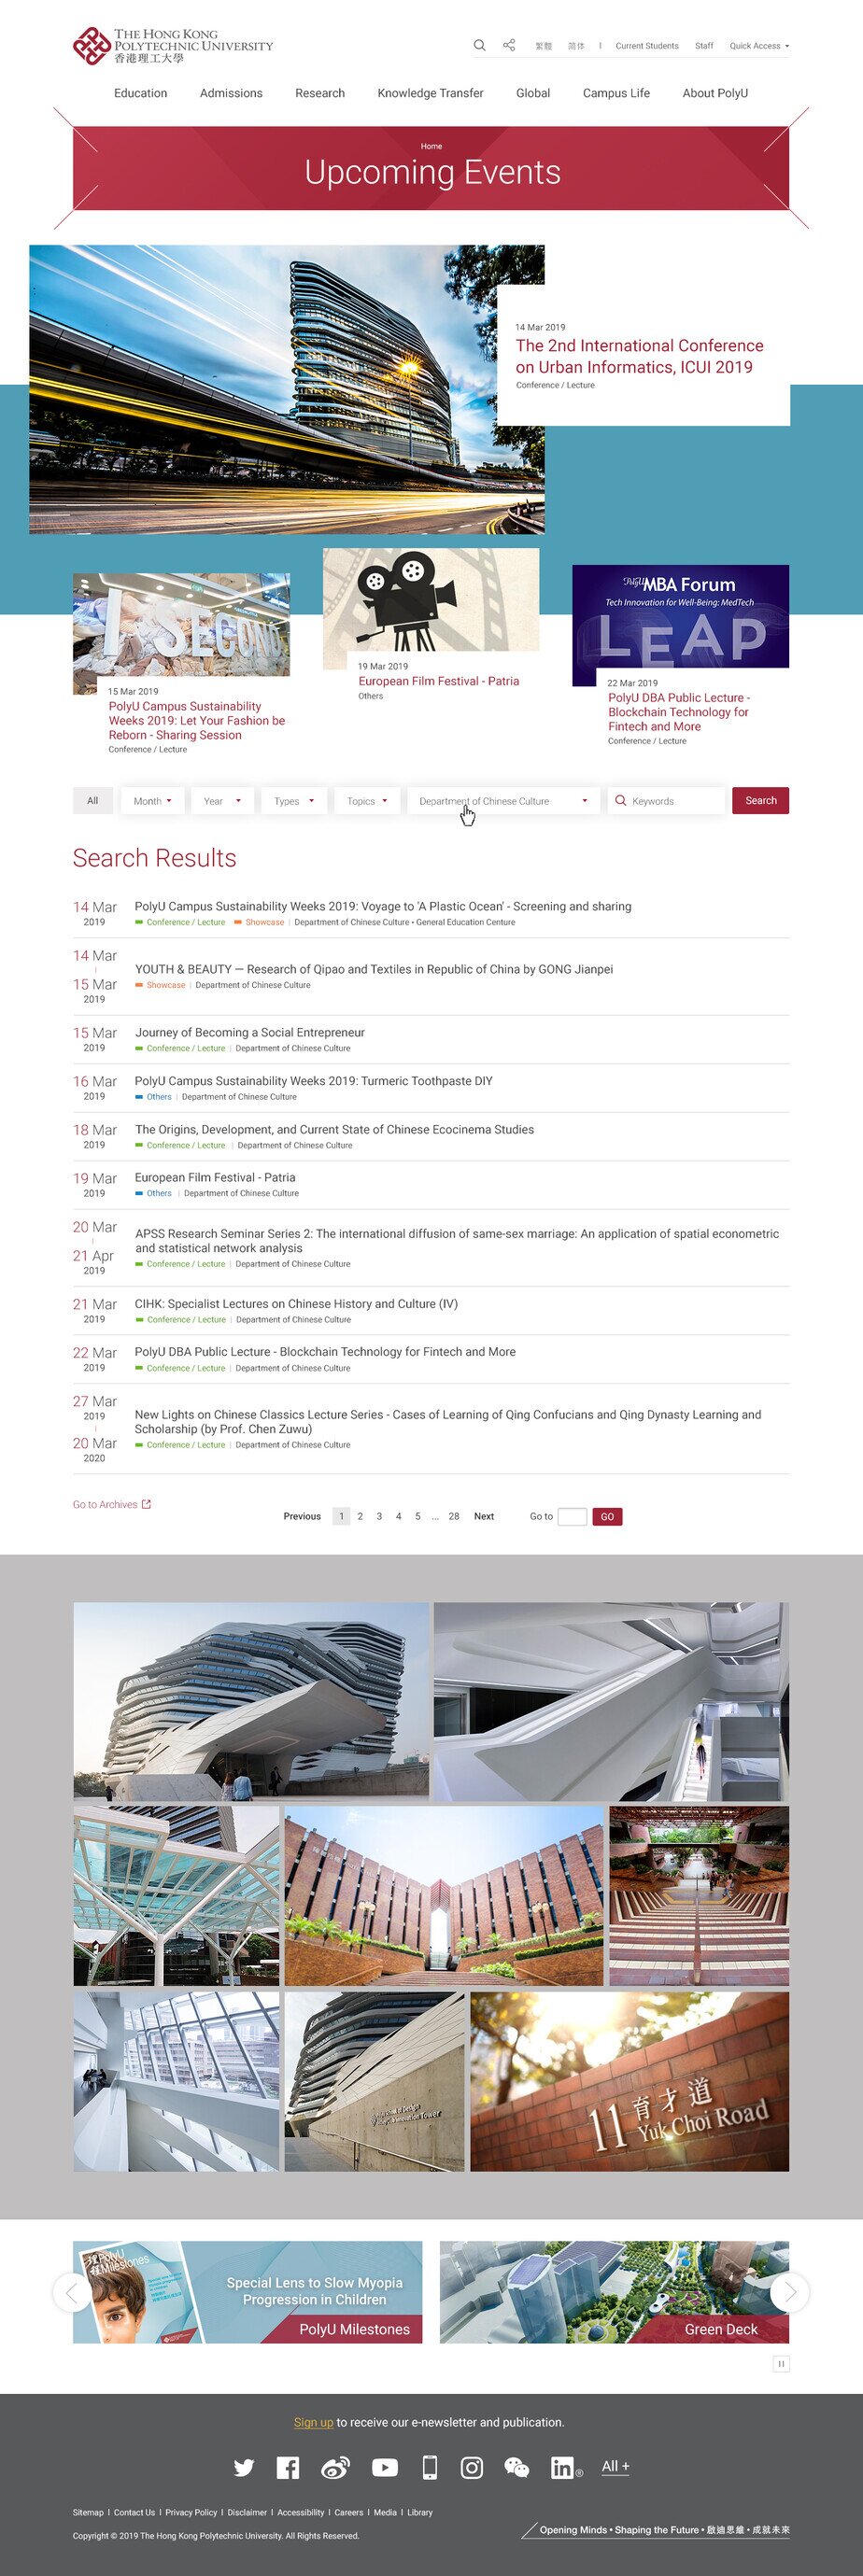 Hong Kong Polytechnic University website screenshot for desktop version 5 of 5